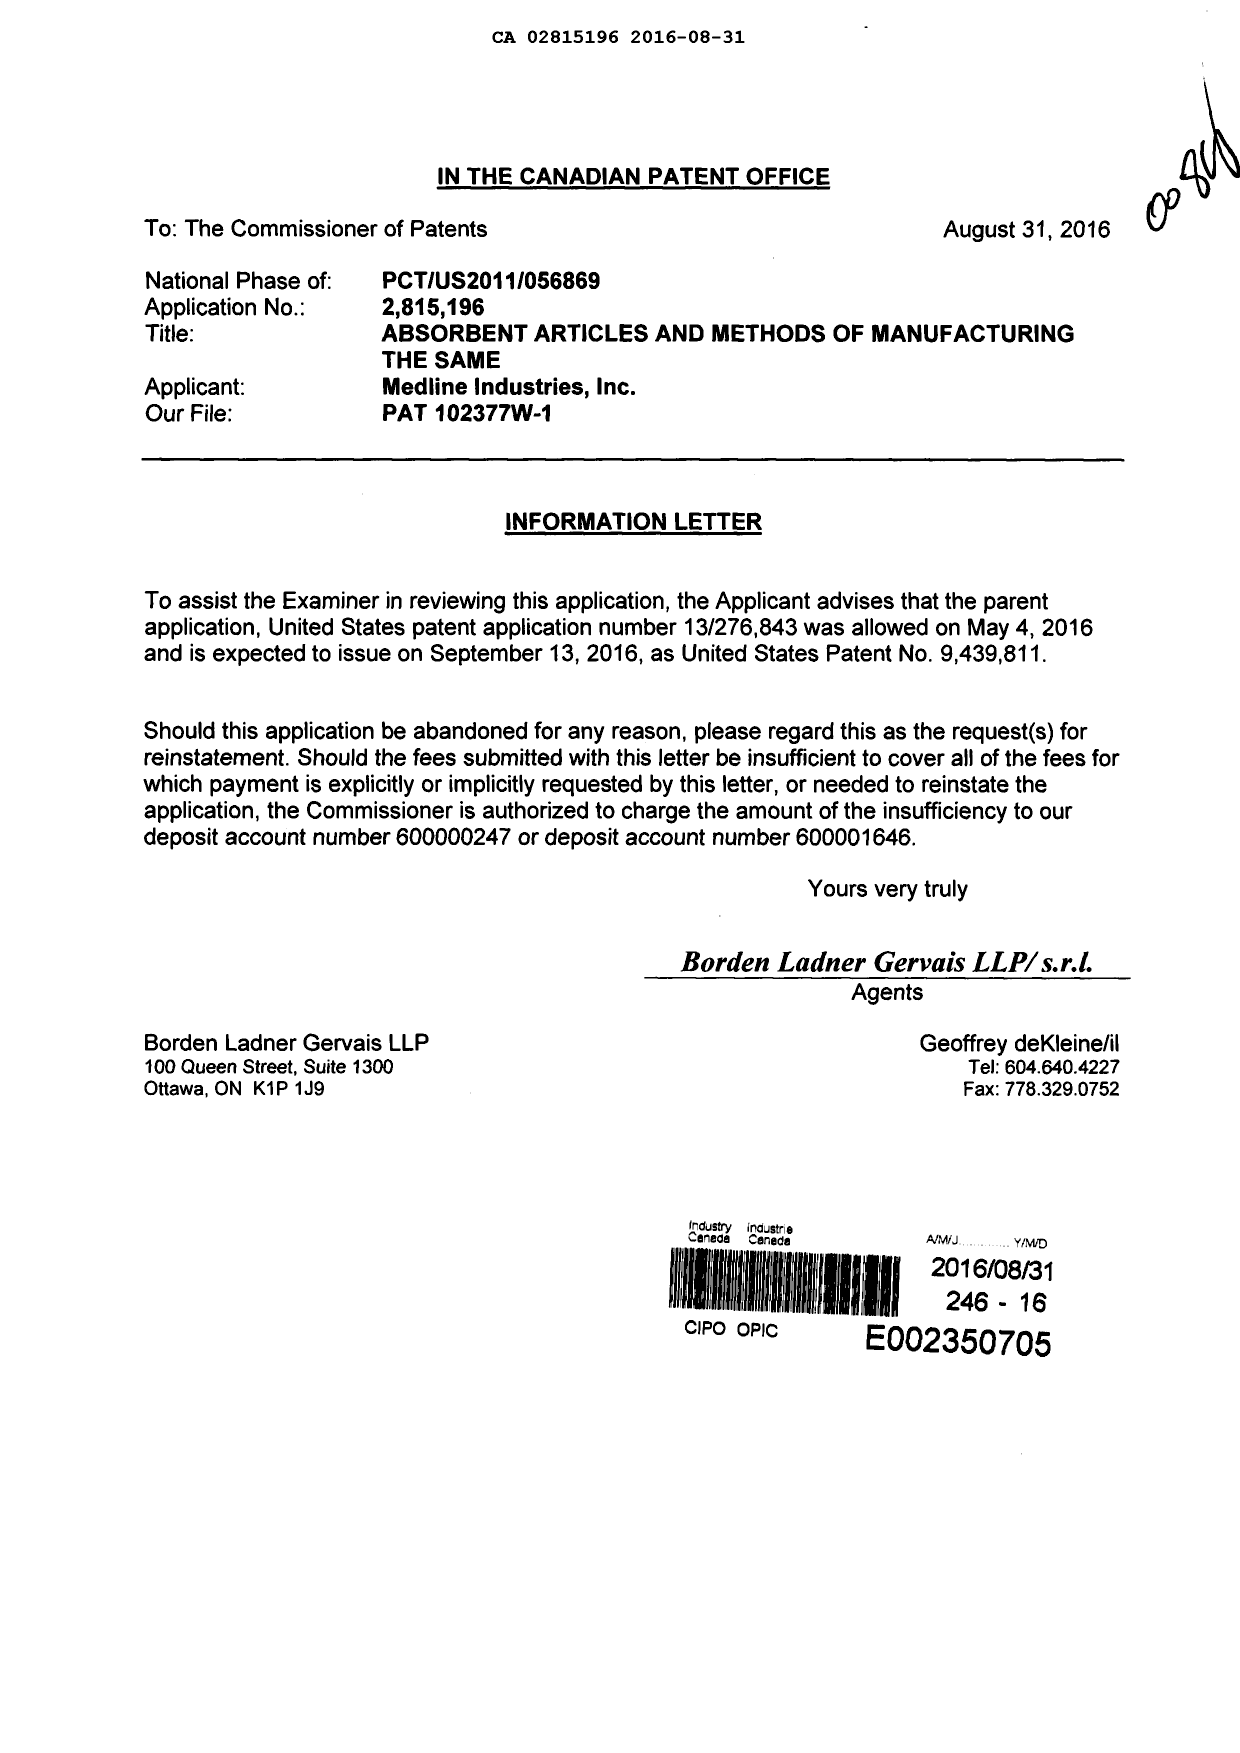 Canadian Patent Document 2815196. Amendment 20160831. Image 1 of 1